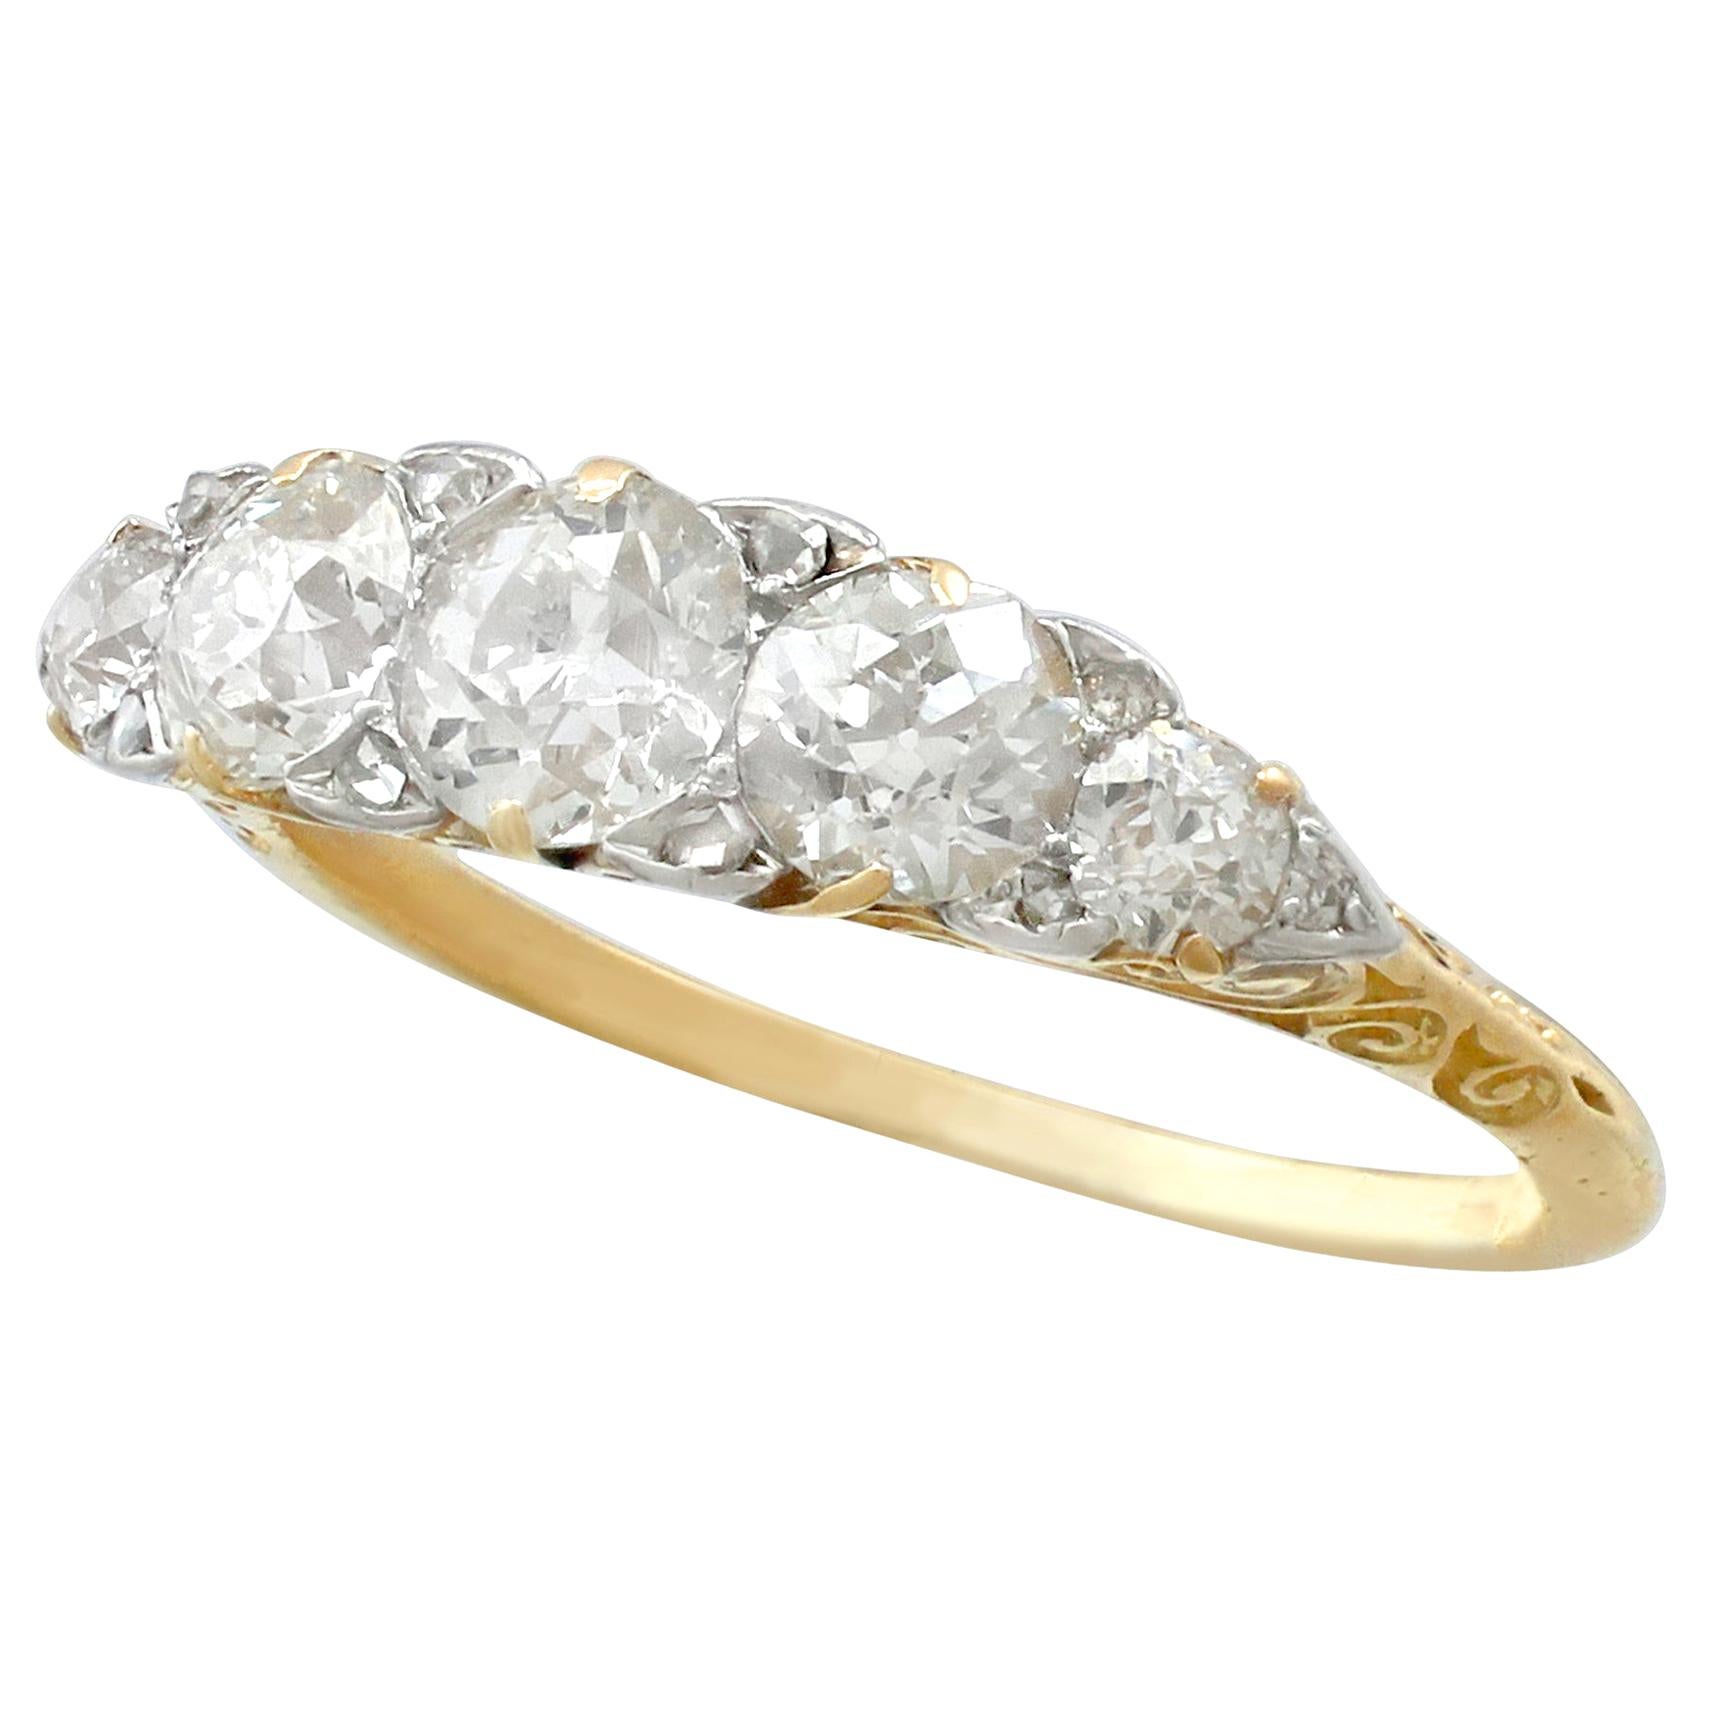 Antique 1910s 2.06 Carat Diamond Five-Stone Yellow Gold Ring